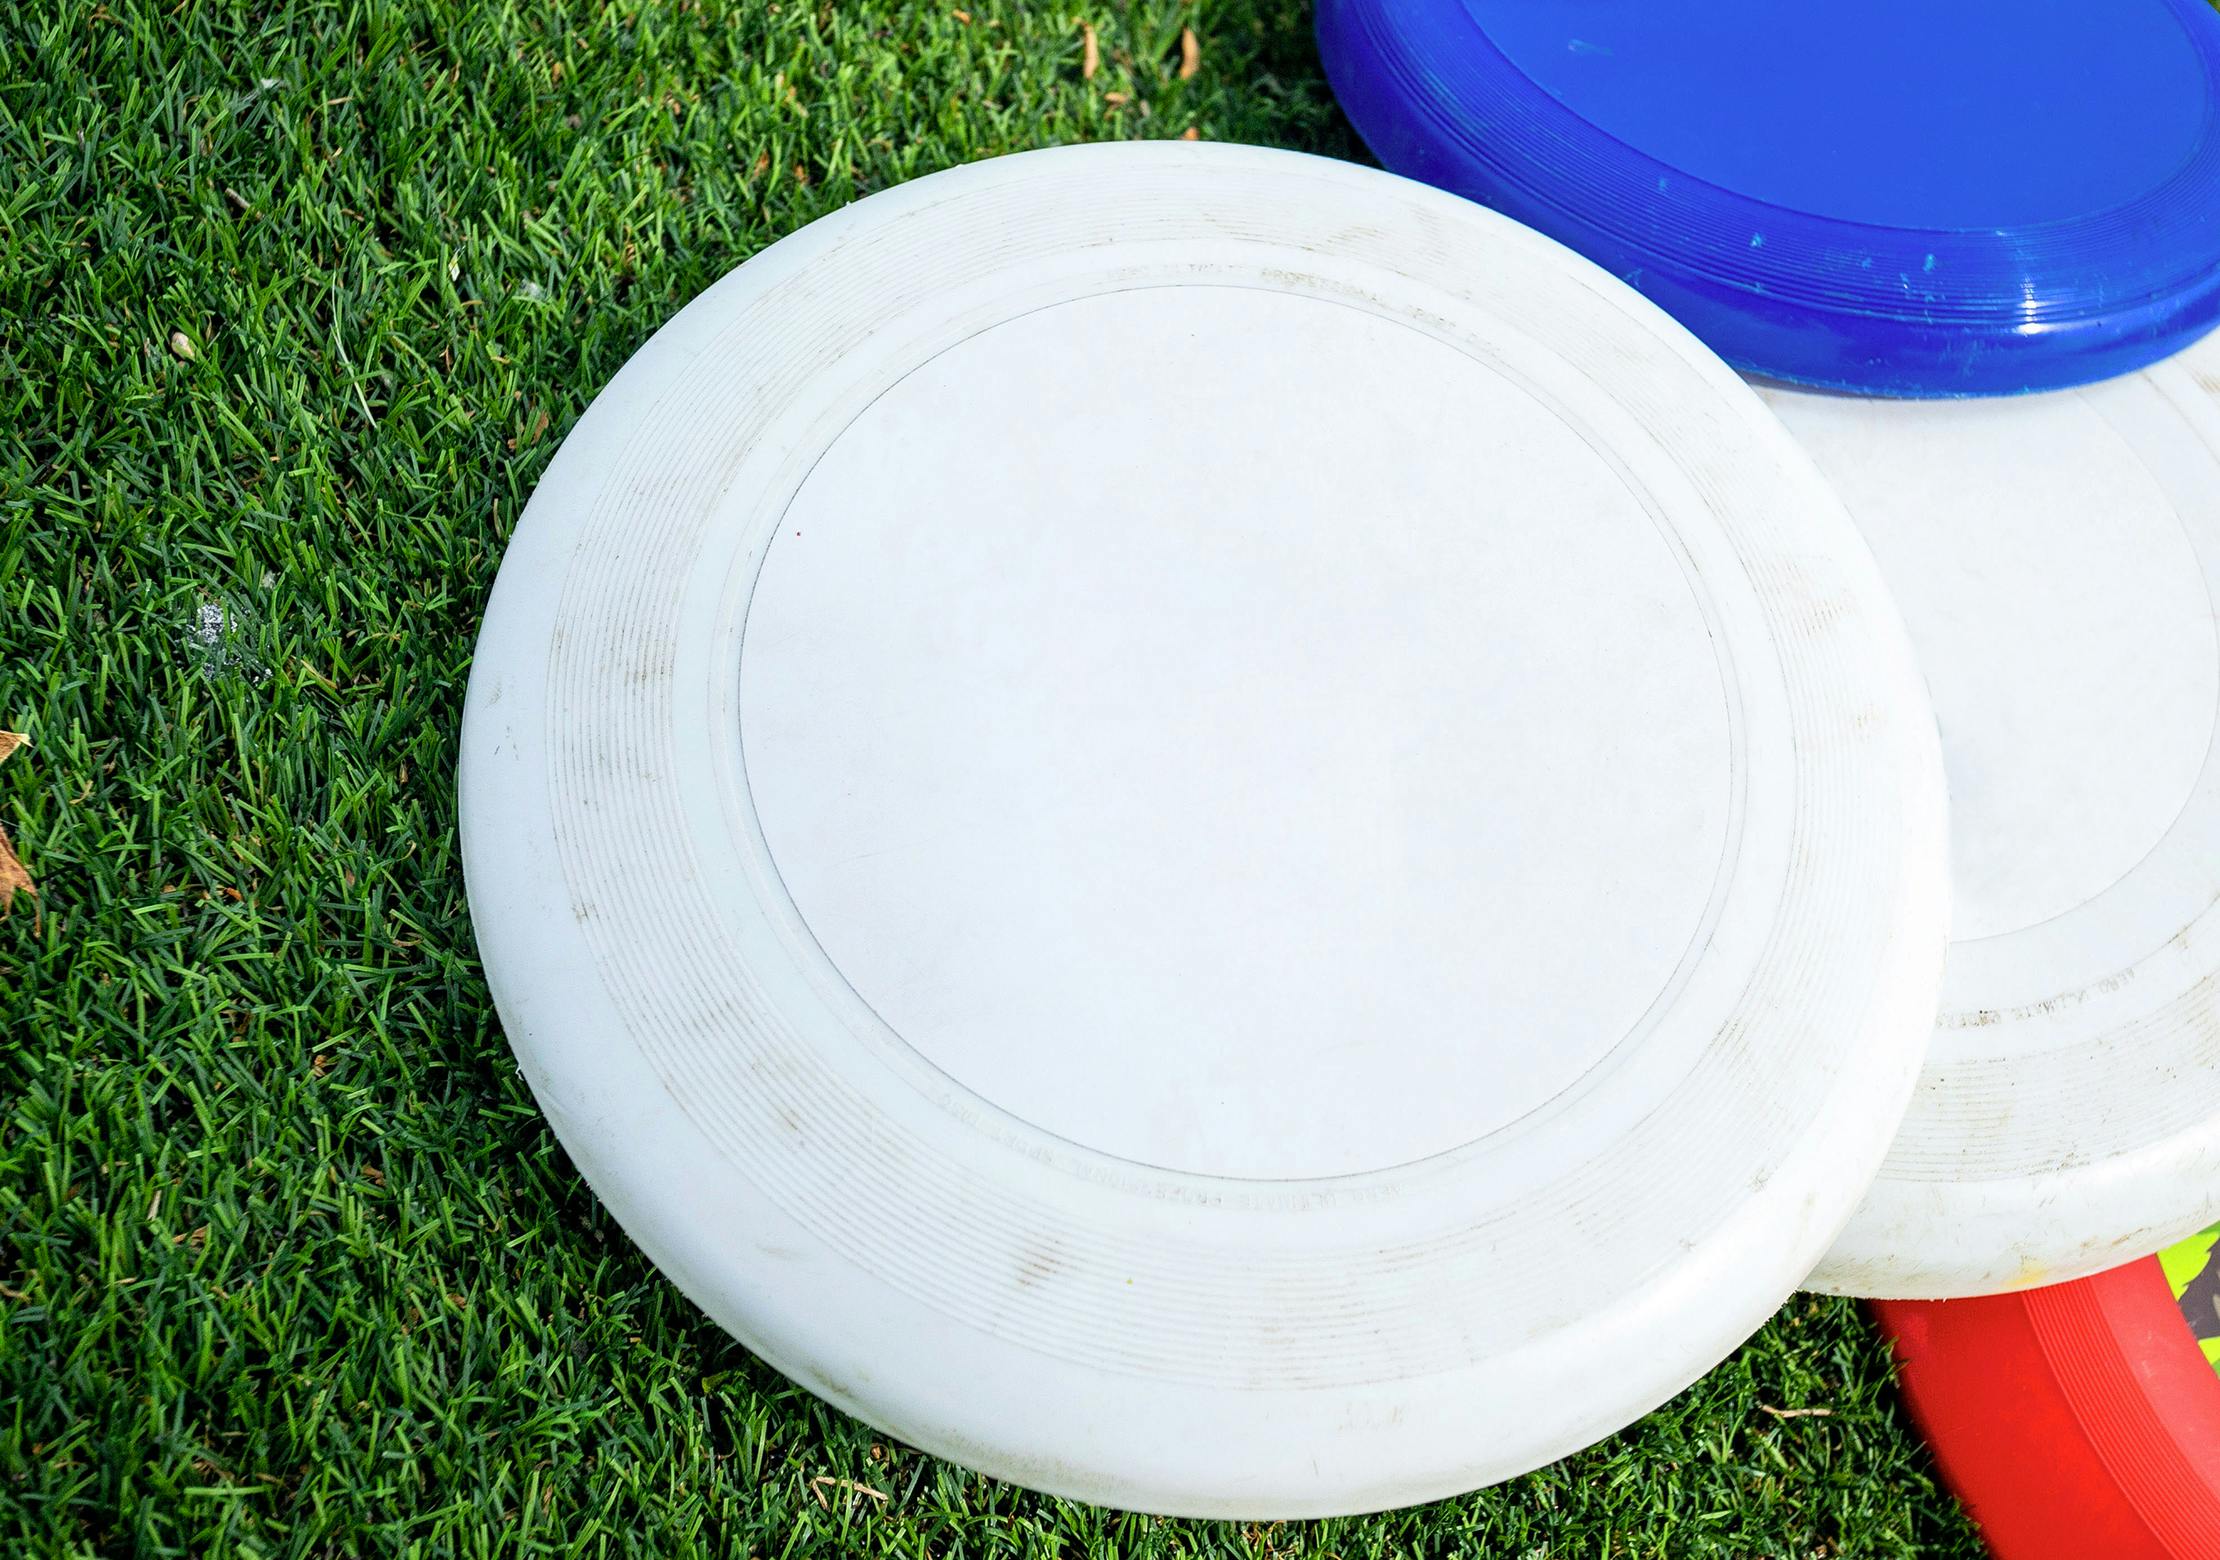 Ligue Ultimate Frisbee - CEPSUM